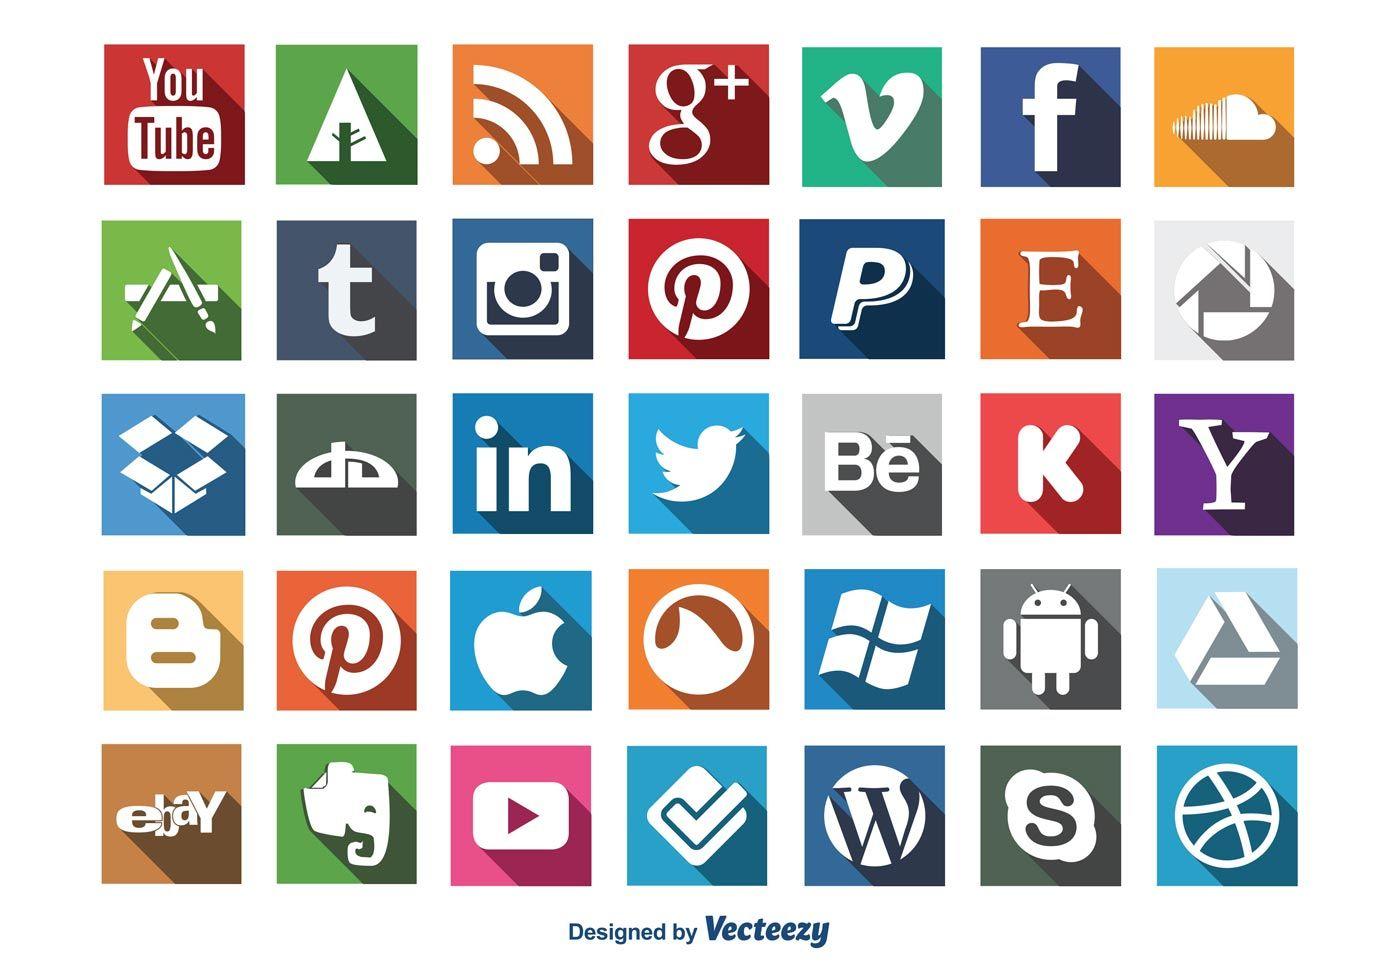 Top Social Media Logo - Free, High Quality Social Media Icon Sets (Something For Everyone)